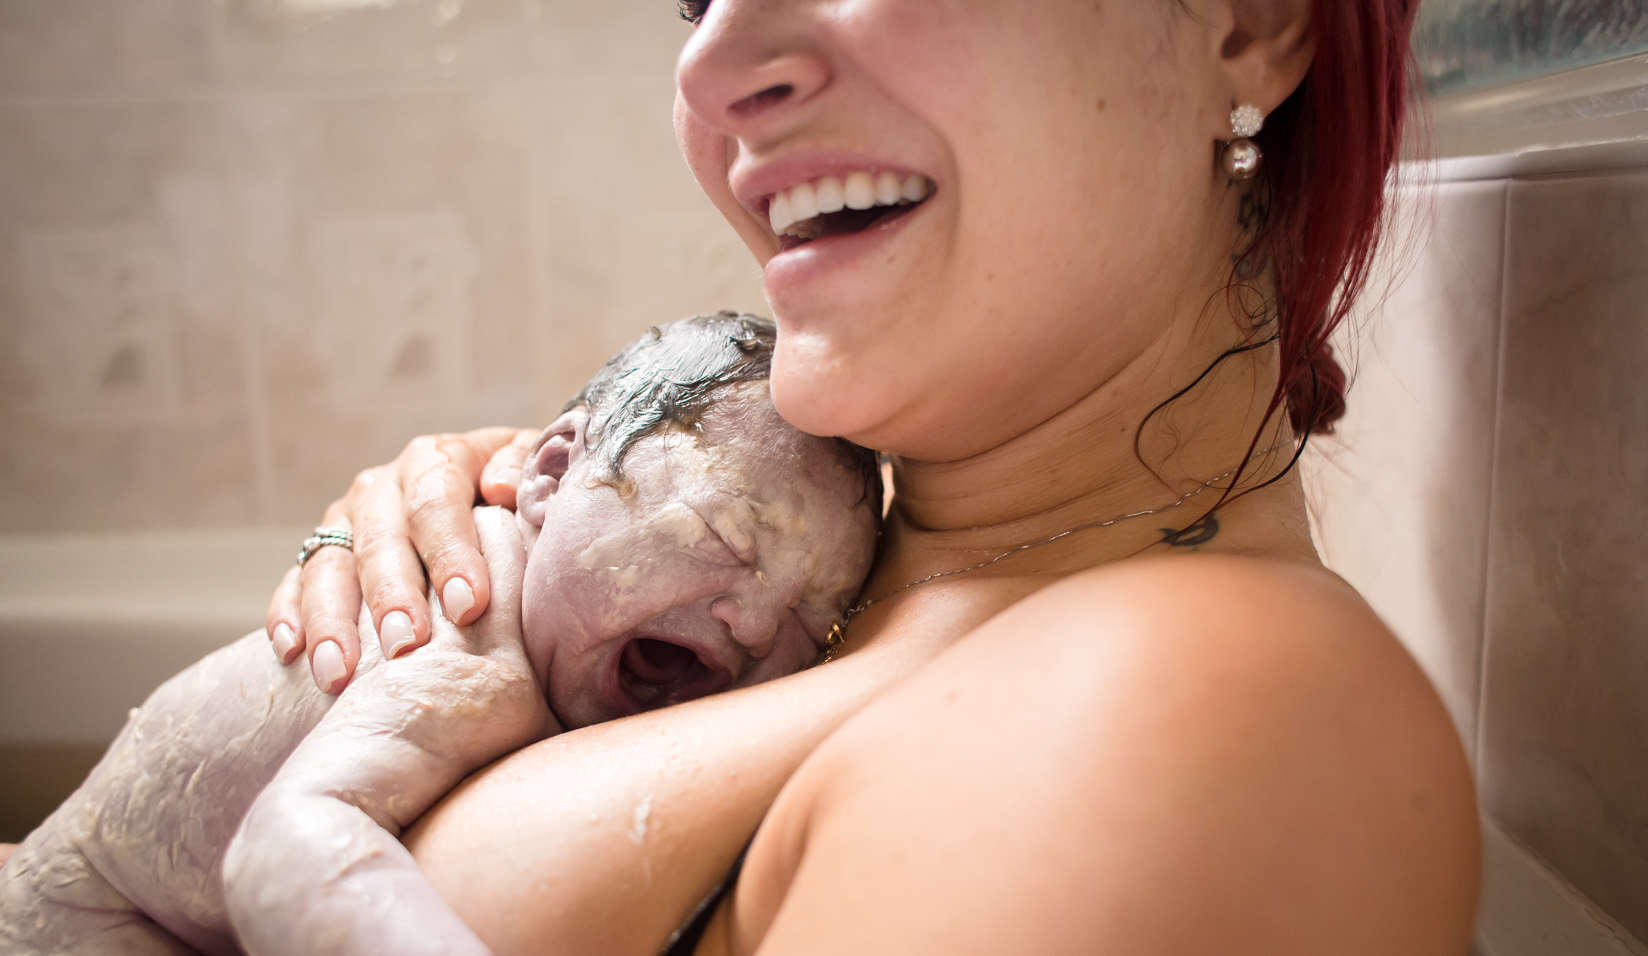 gelena-hinkley-natural-birthworks-doula-childbirth-class-birth-center-lactation-home-breastfeeding-cloth-diaper-6.jpg